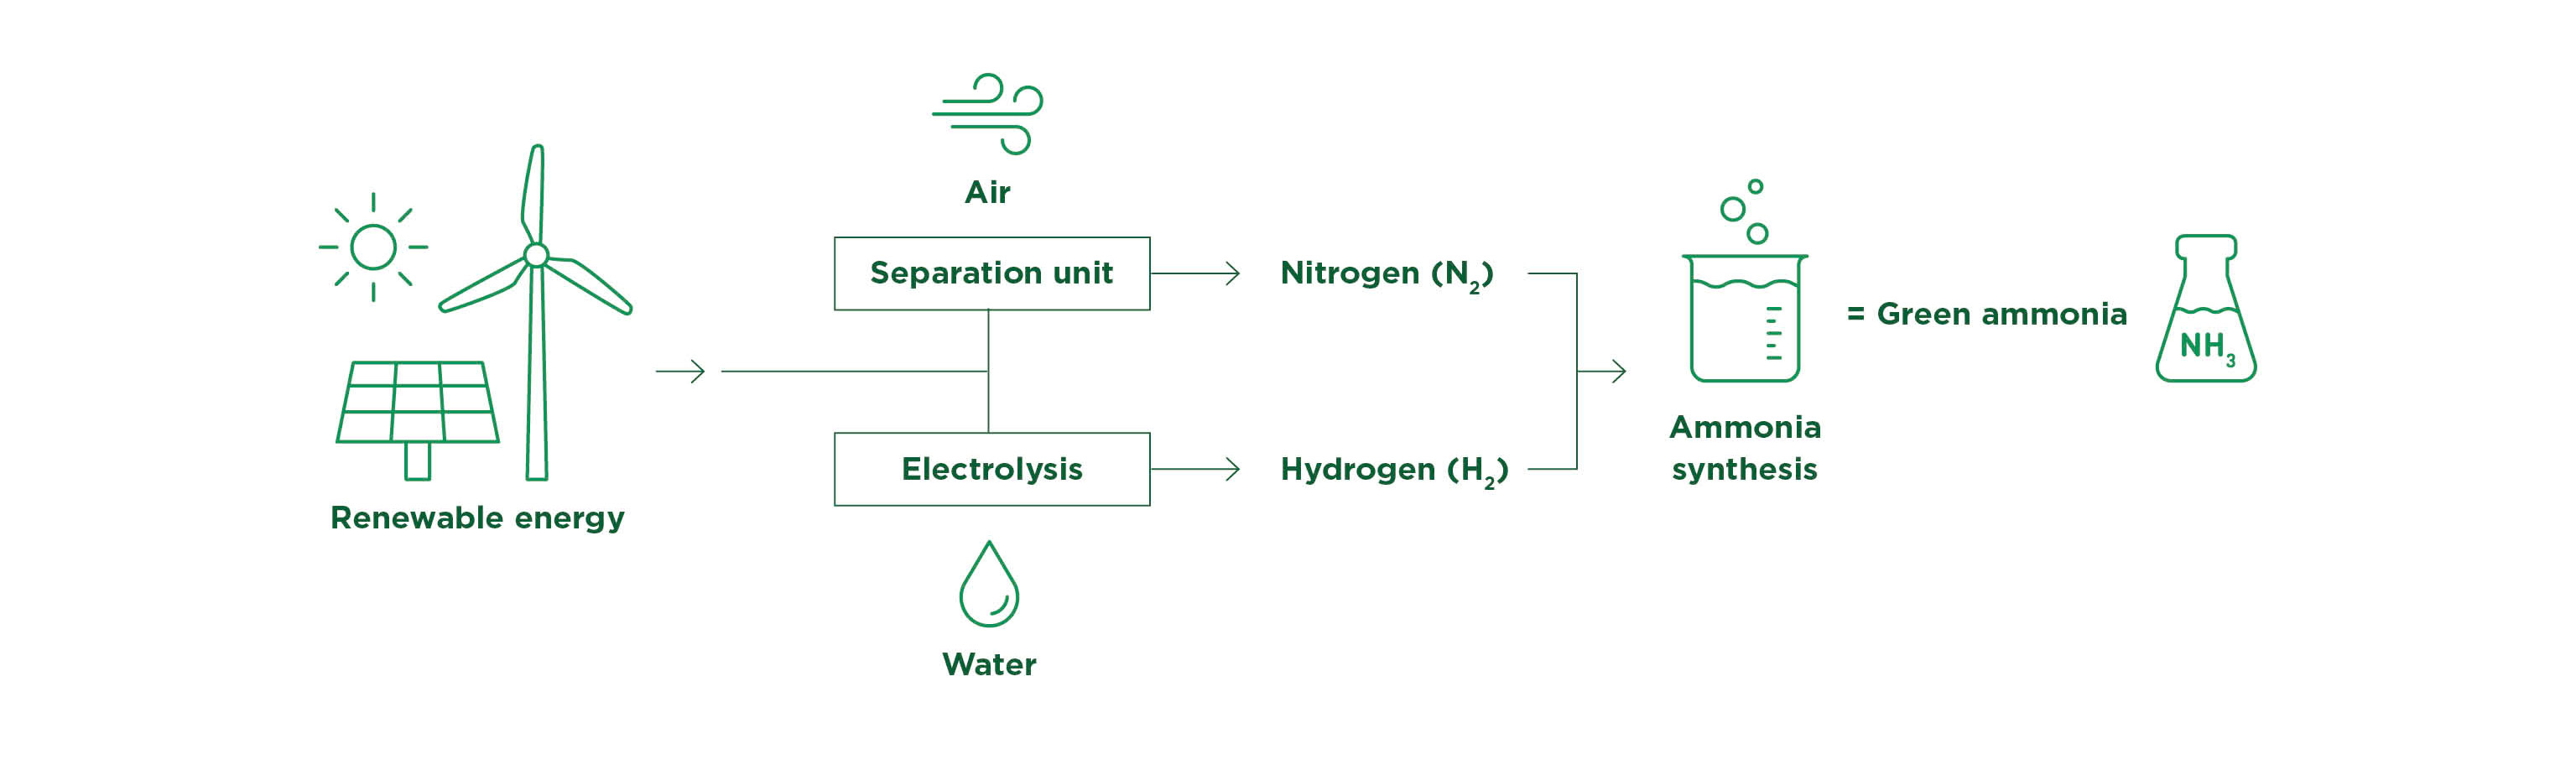 Green ammonia production process